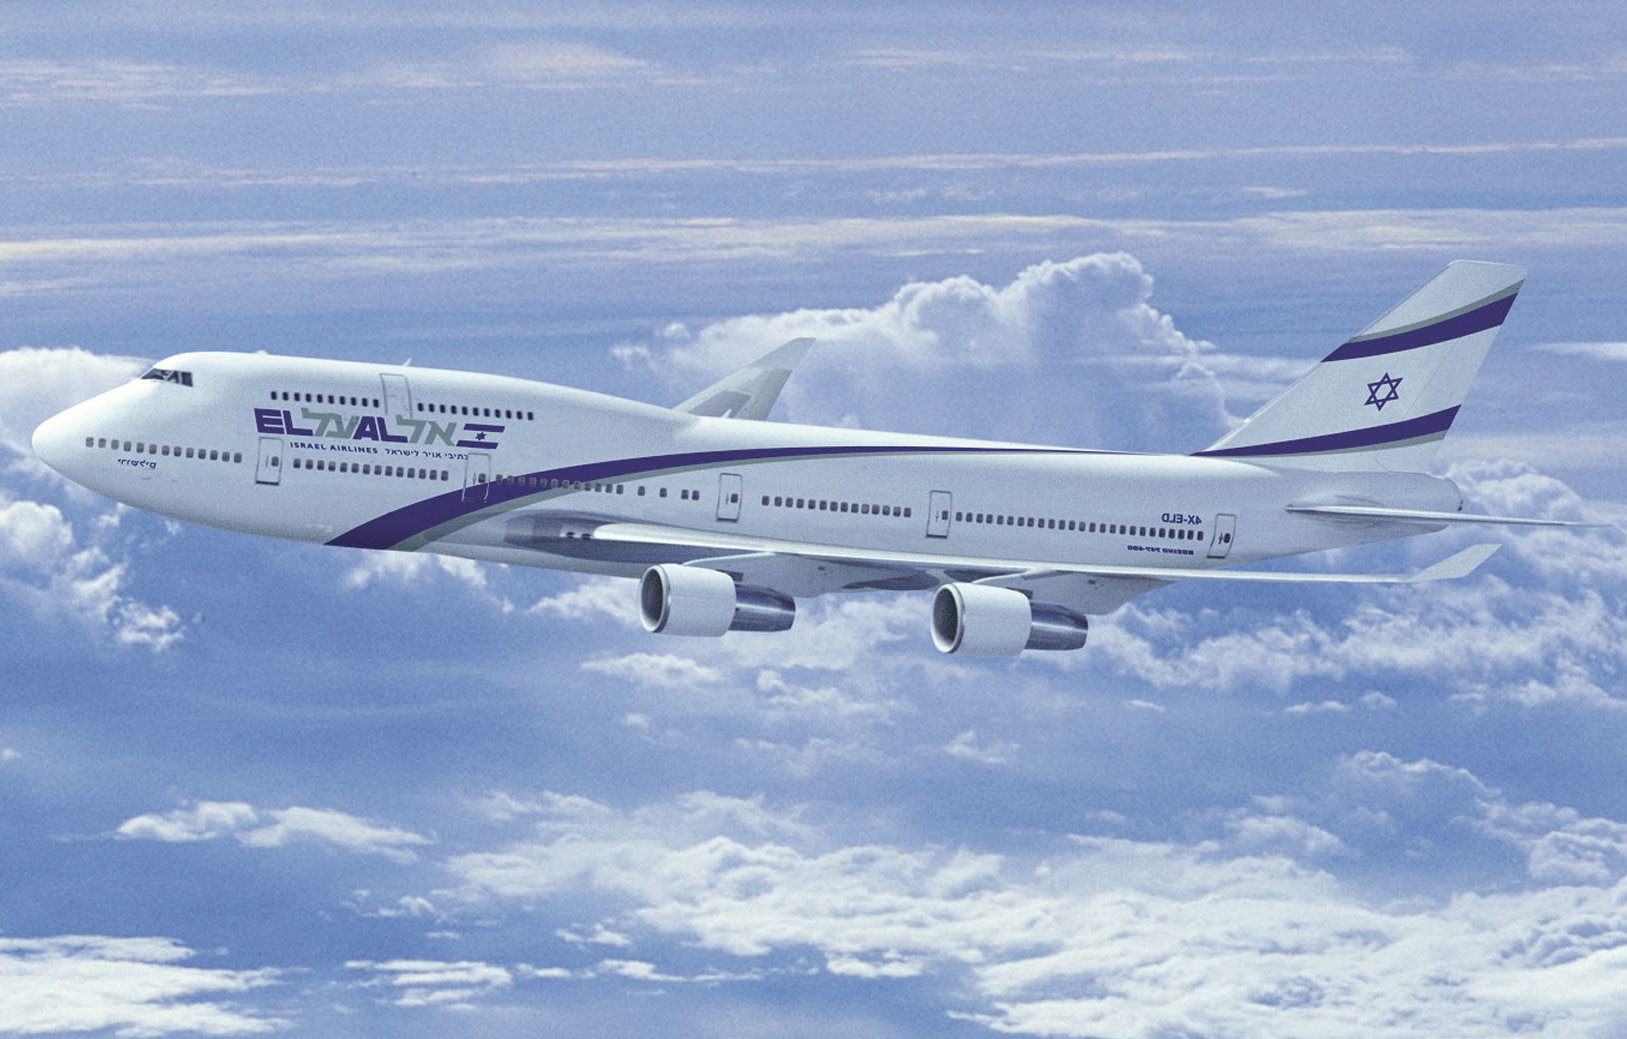 Купить авиабилеты эль аль. Боинг 747 el al. Израильские авиалинии Боинг 747. Самолёт авиакомпаний Эль Аль.